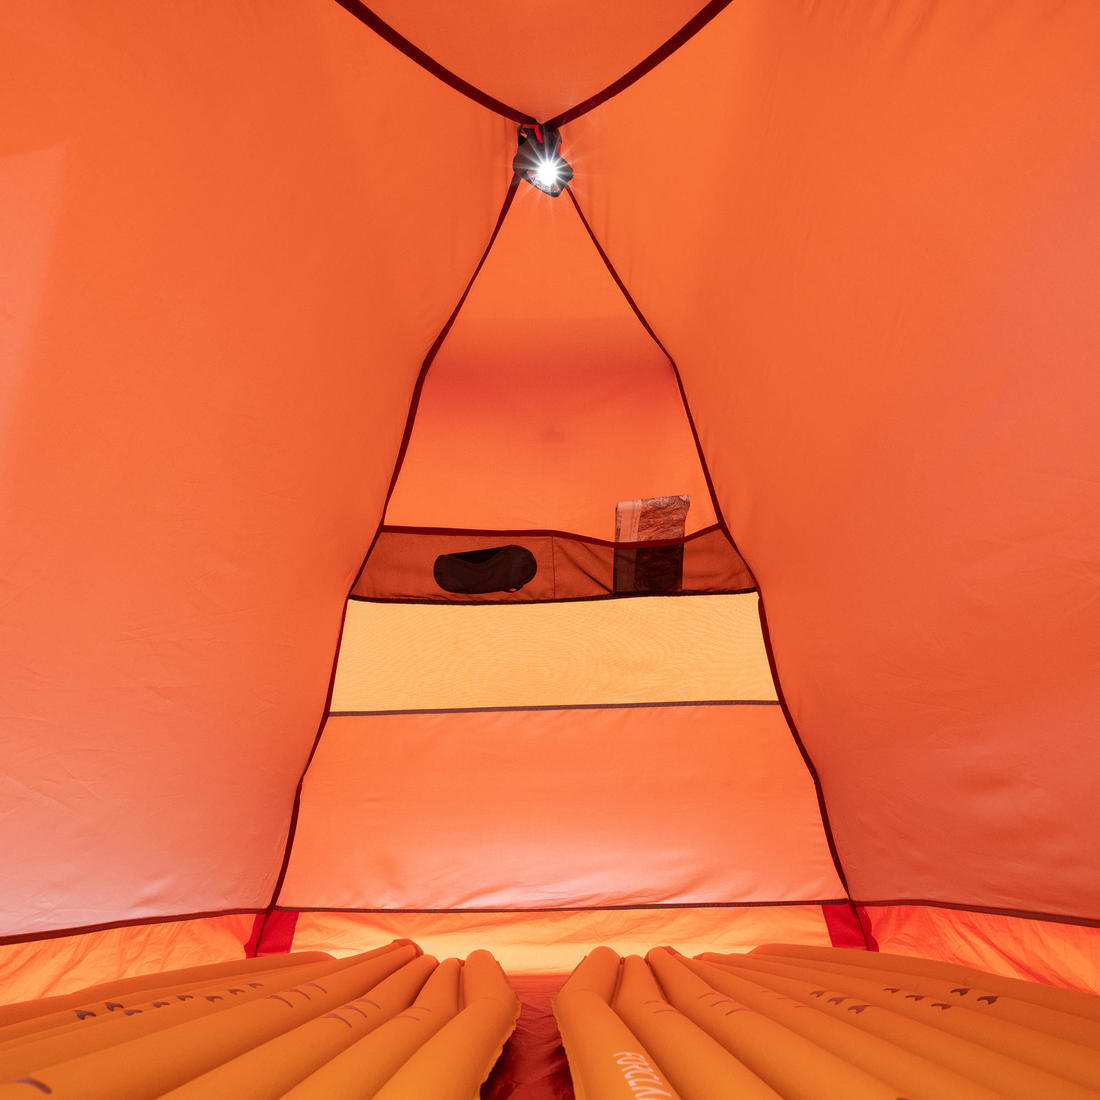 FORCLAZ (フォルクラ) キャンプ・トレッキング・登山用テント  3シーズン用 自立式 TREK 100 - 2人用